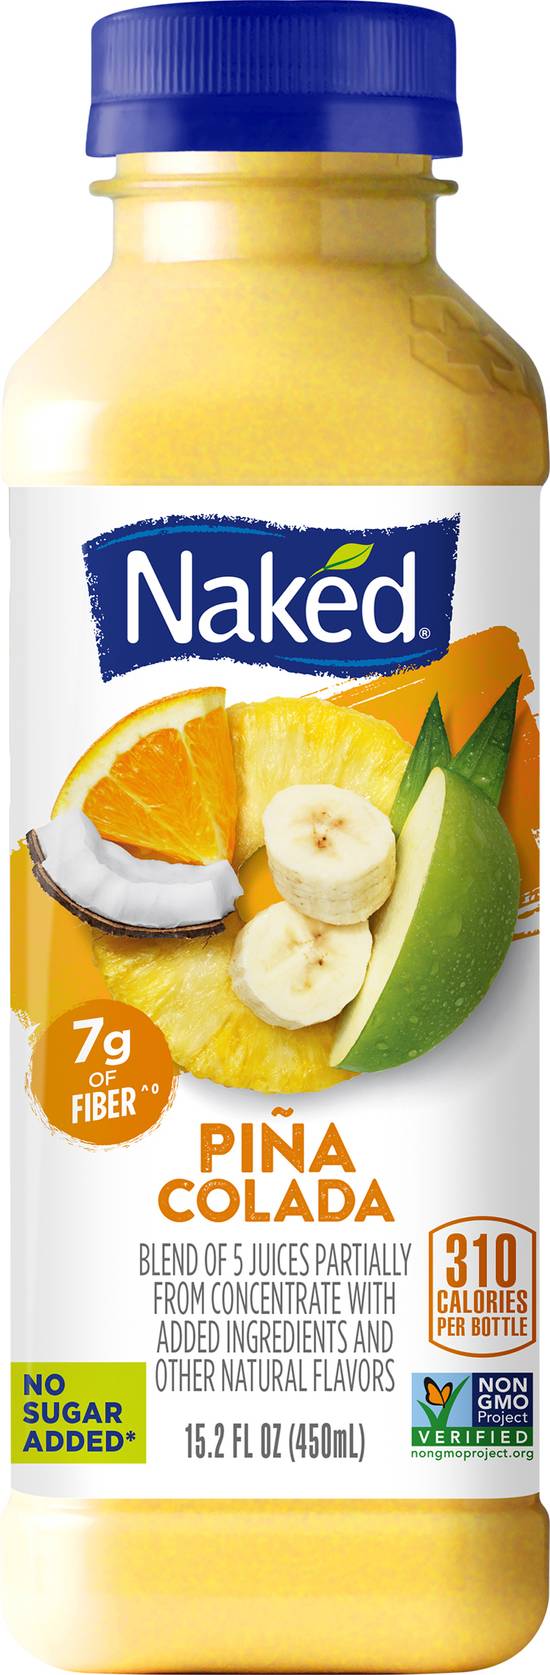 Naked 100% Juice Blend (15.2 fl oz) (piña colada)